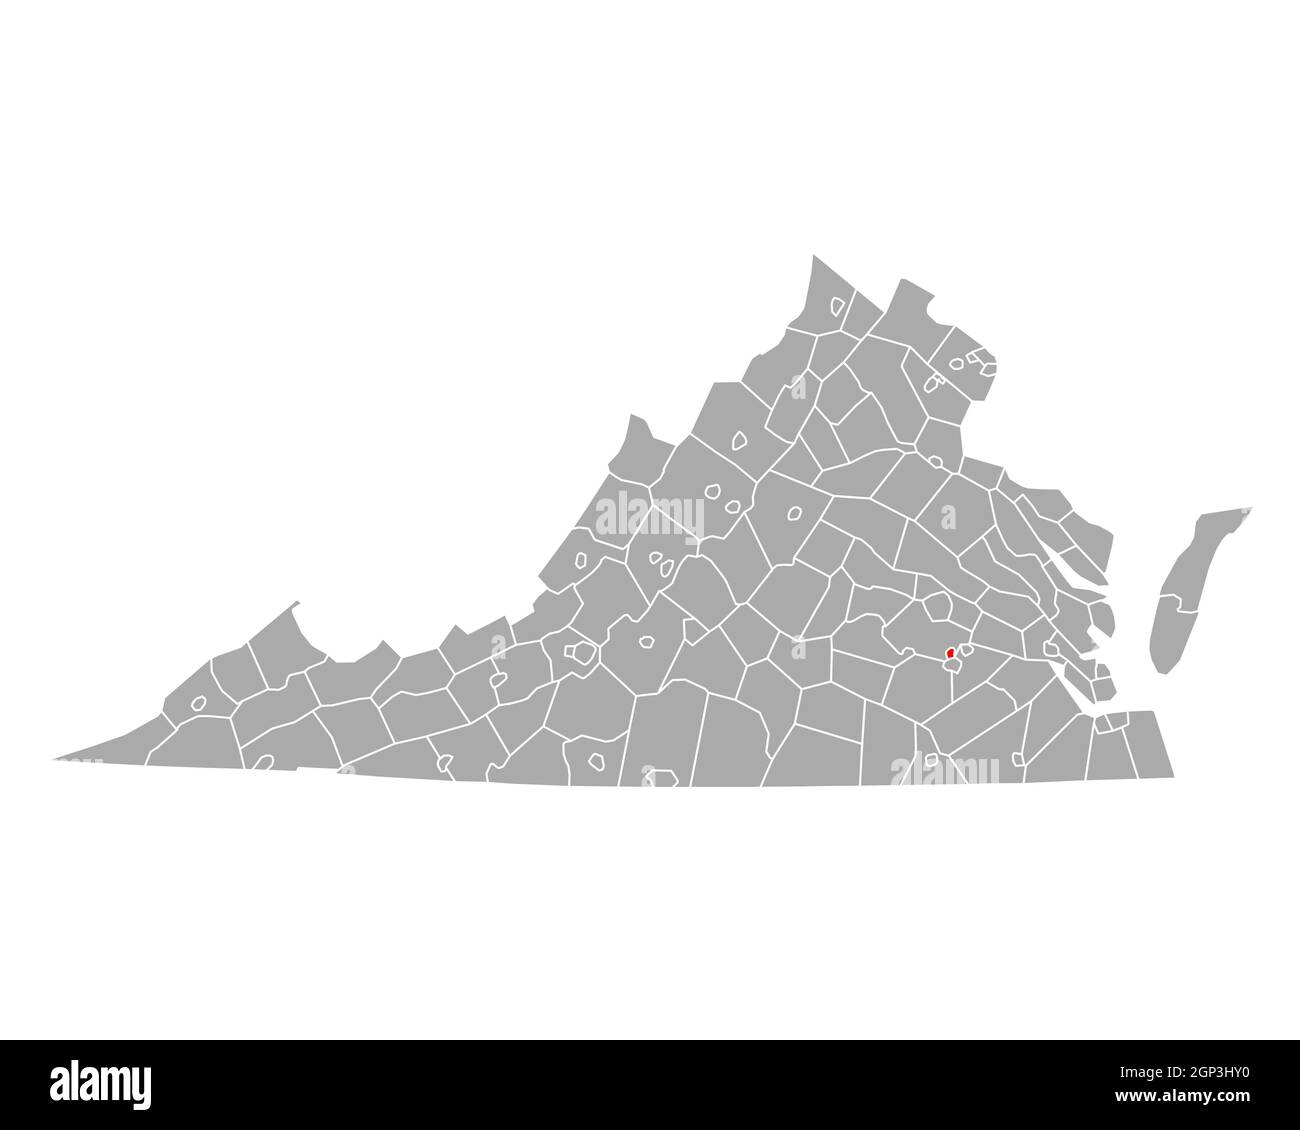 Map Of Colonial Heights In Virginia 2GP3HY0 